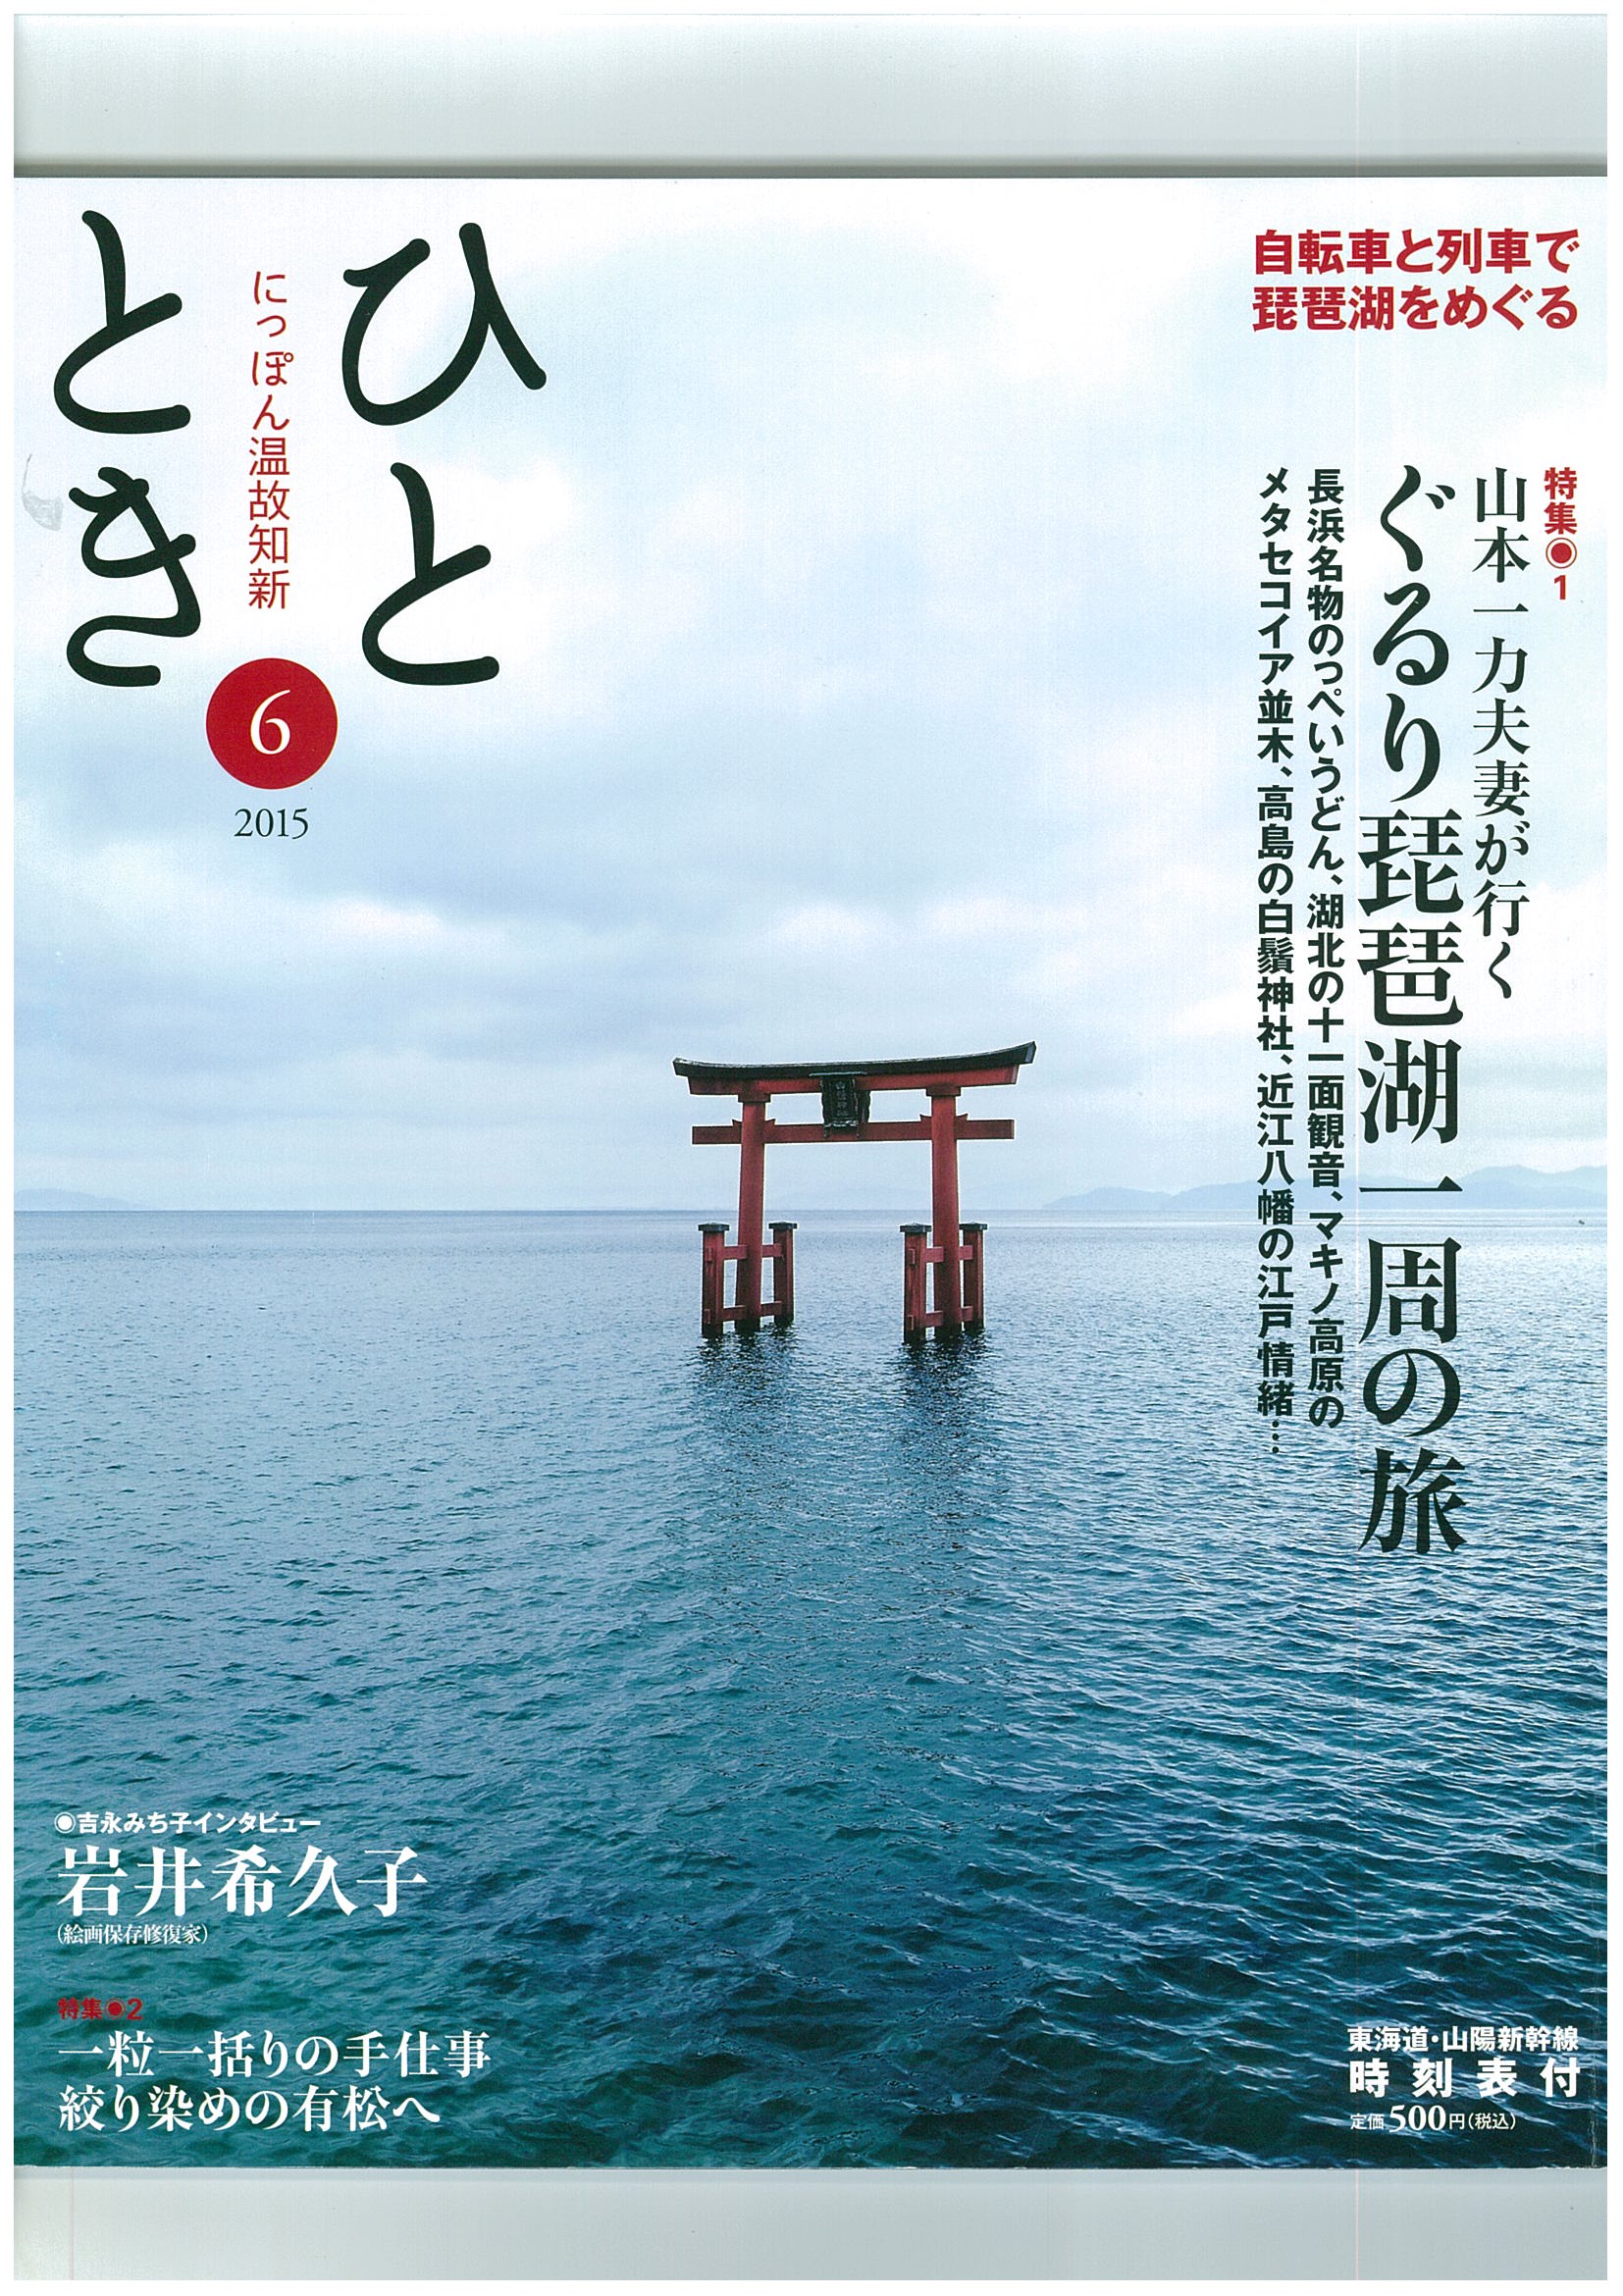 http://www.torii-sauce.jp/media/20150526%E3%81%B2%E3%81%A8%E3%81%A8%E3%81%8D%E2%91%A0.jpg